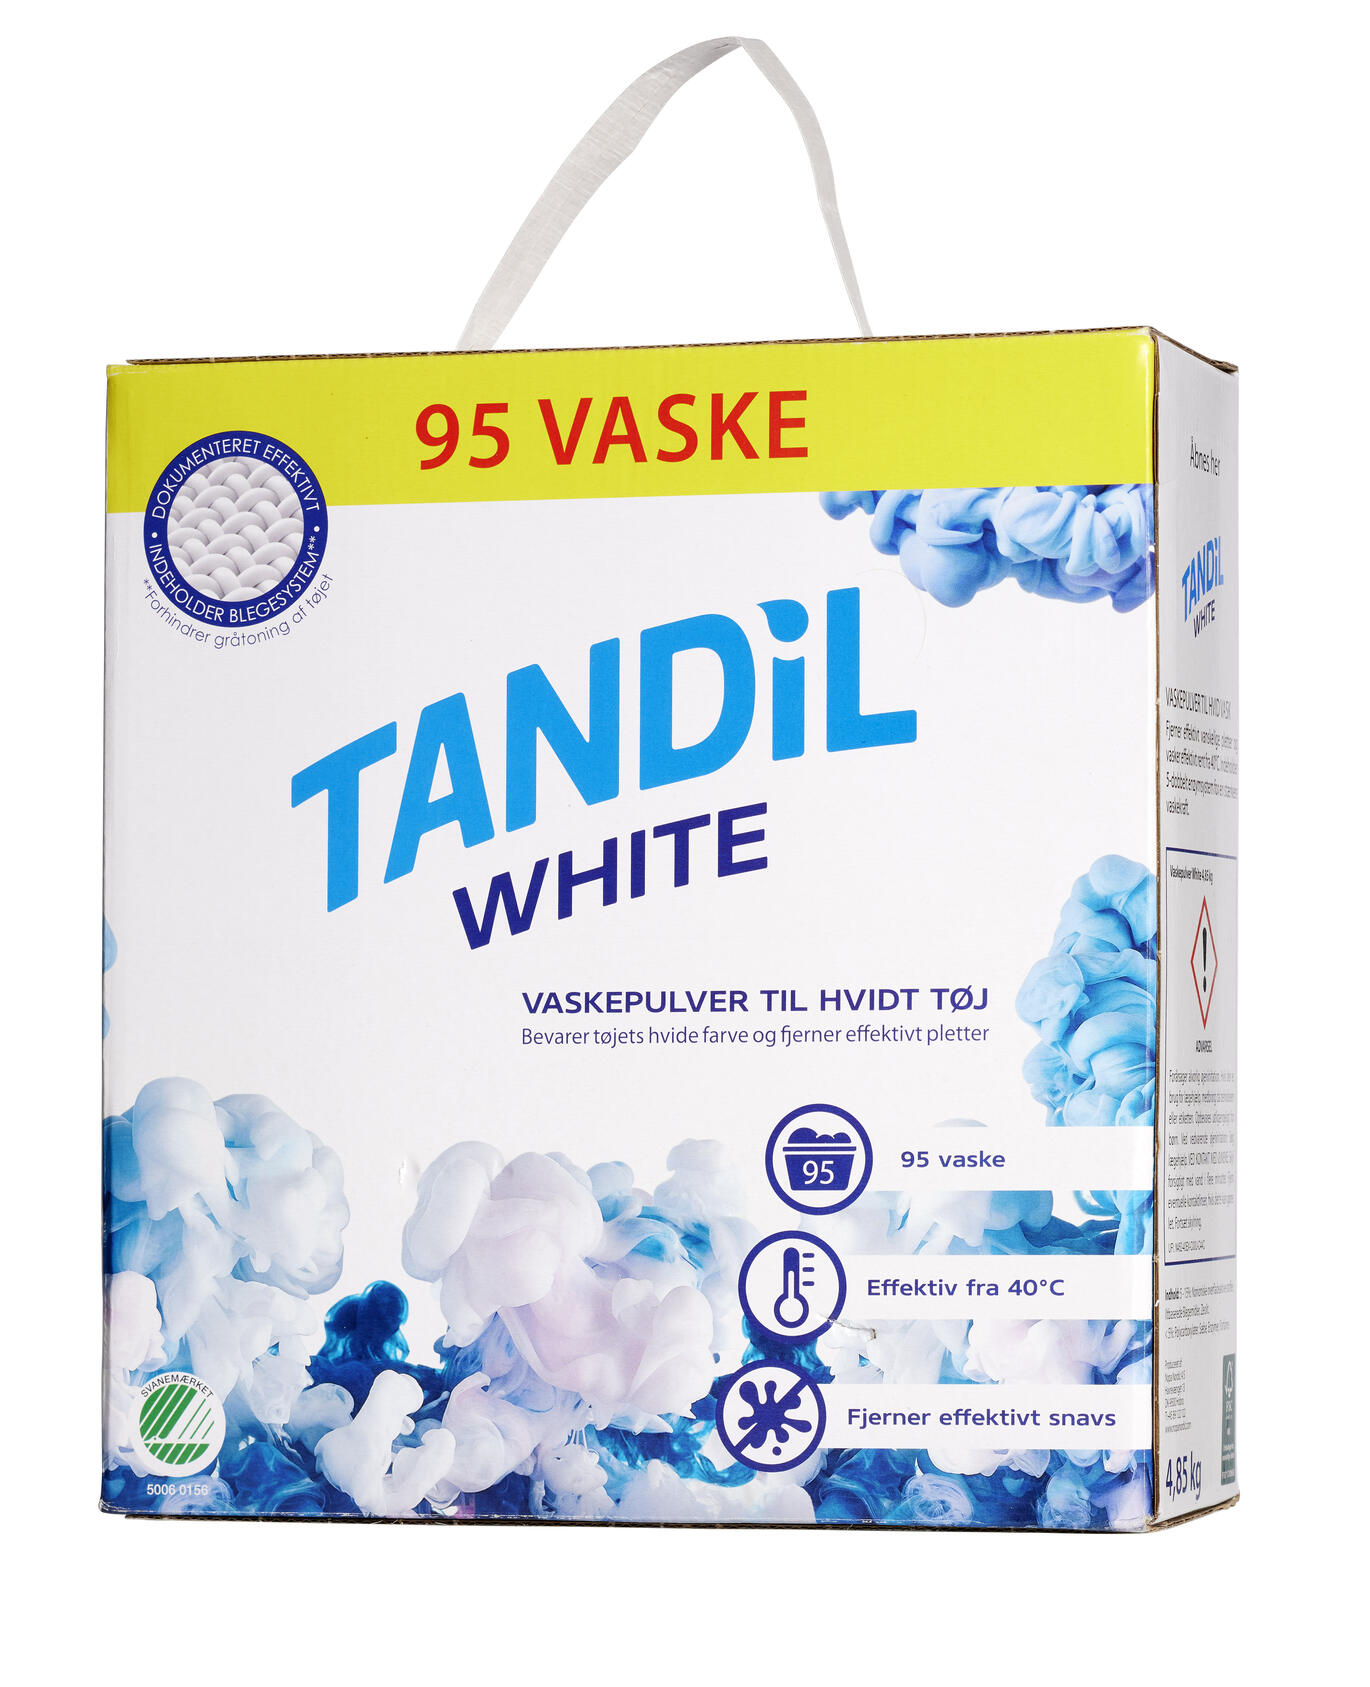 White vaskepulver Tandil